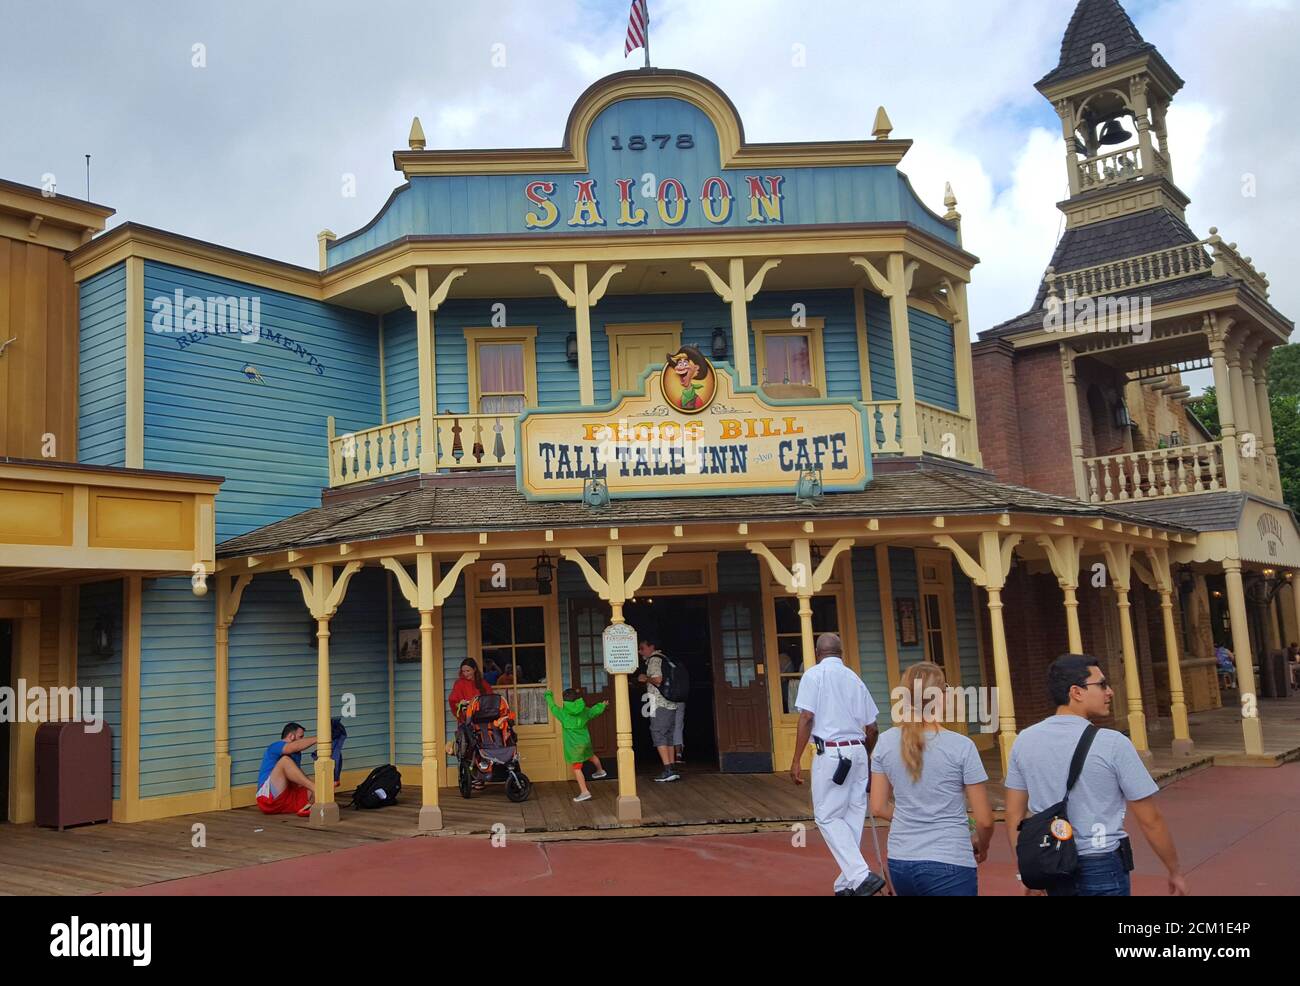 Pecos Bill Tall Tale Inn & Cafe building in Disney Worlds Frontierland, Magic Kingdom, Orlando, Florida, United States Stock Photo